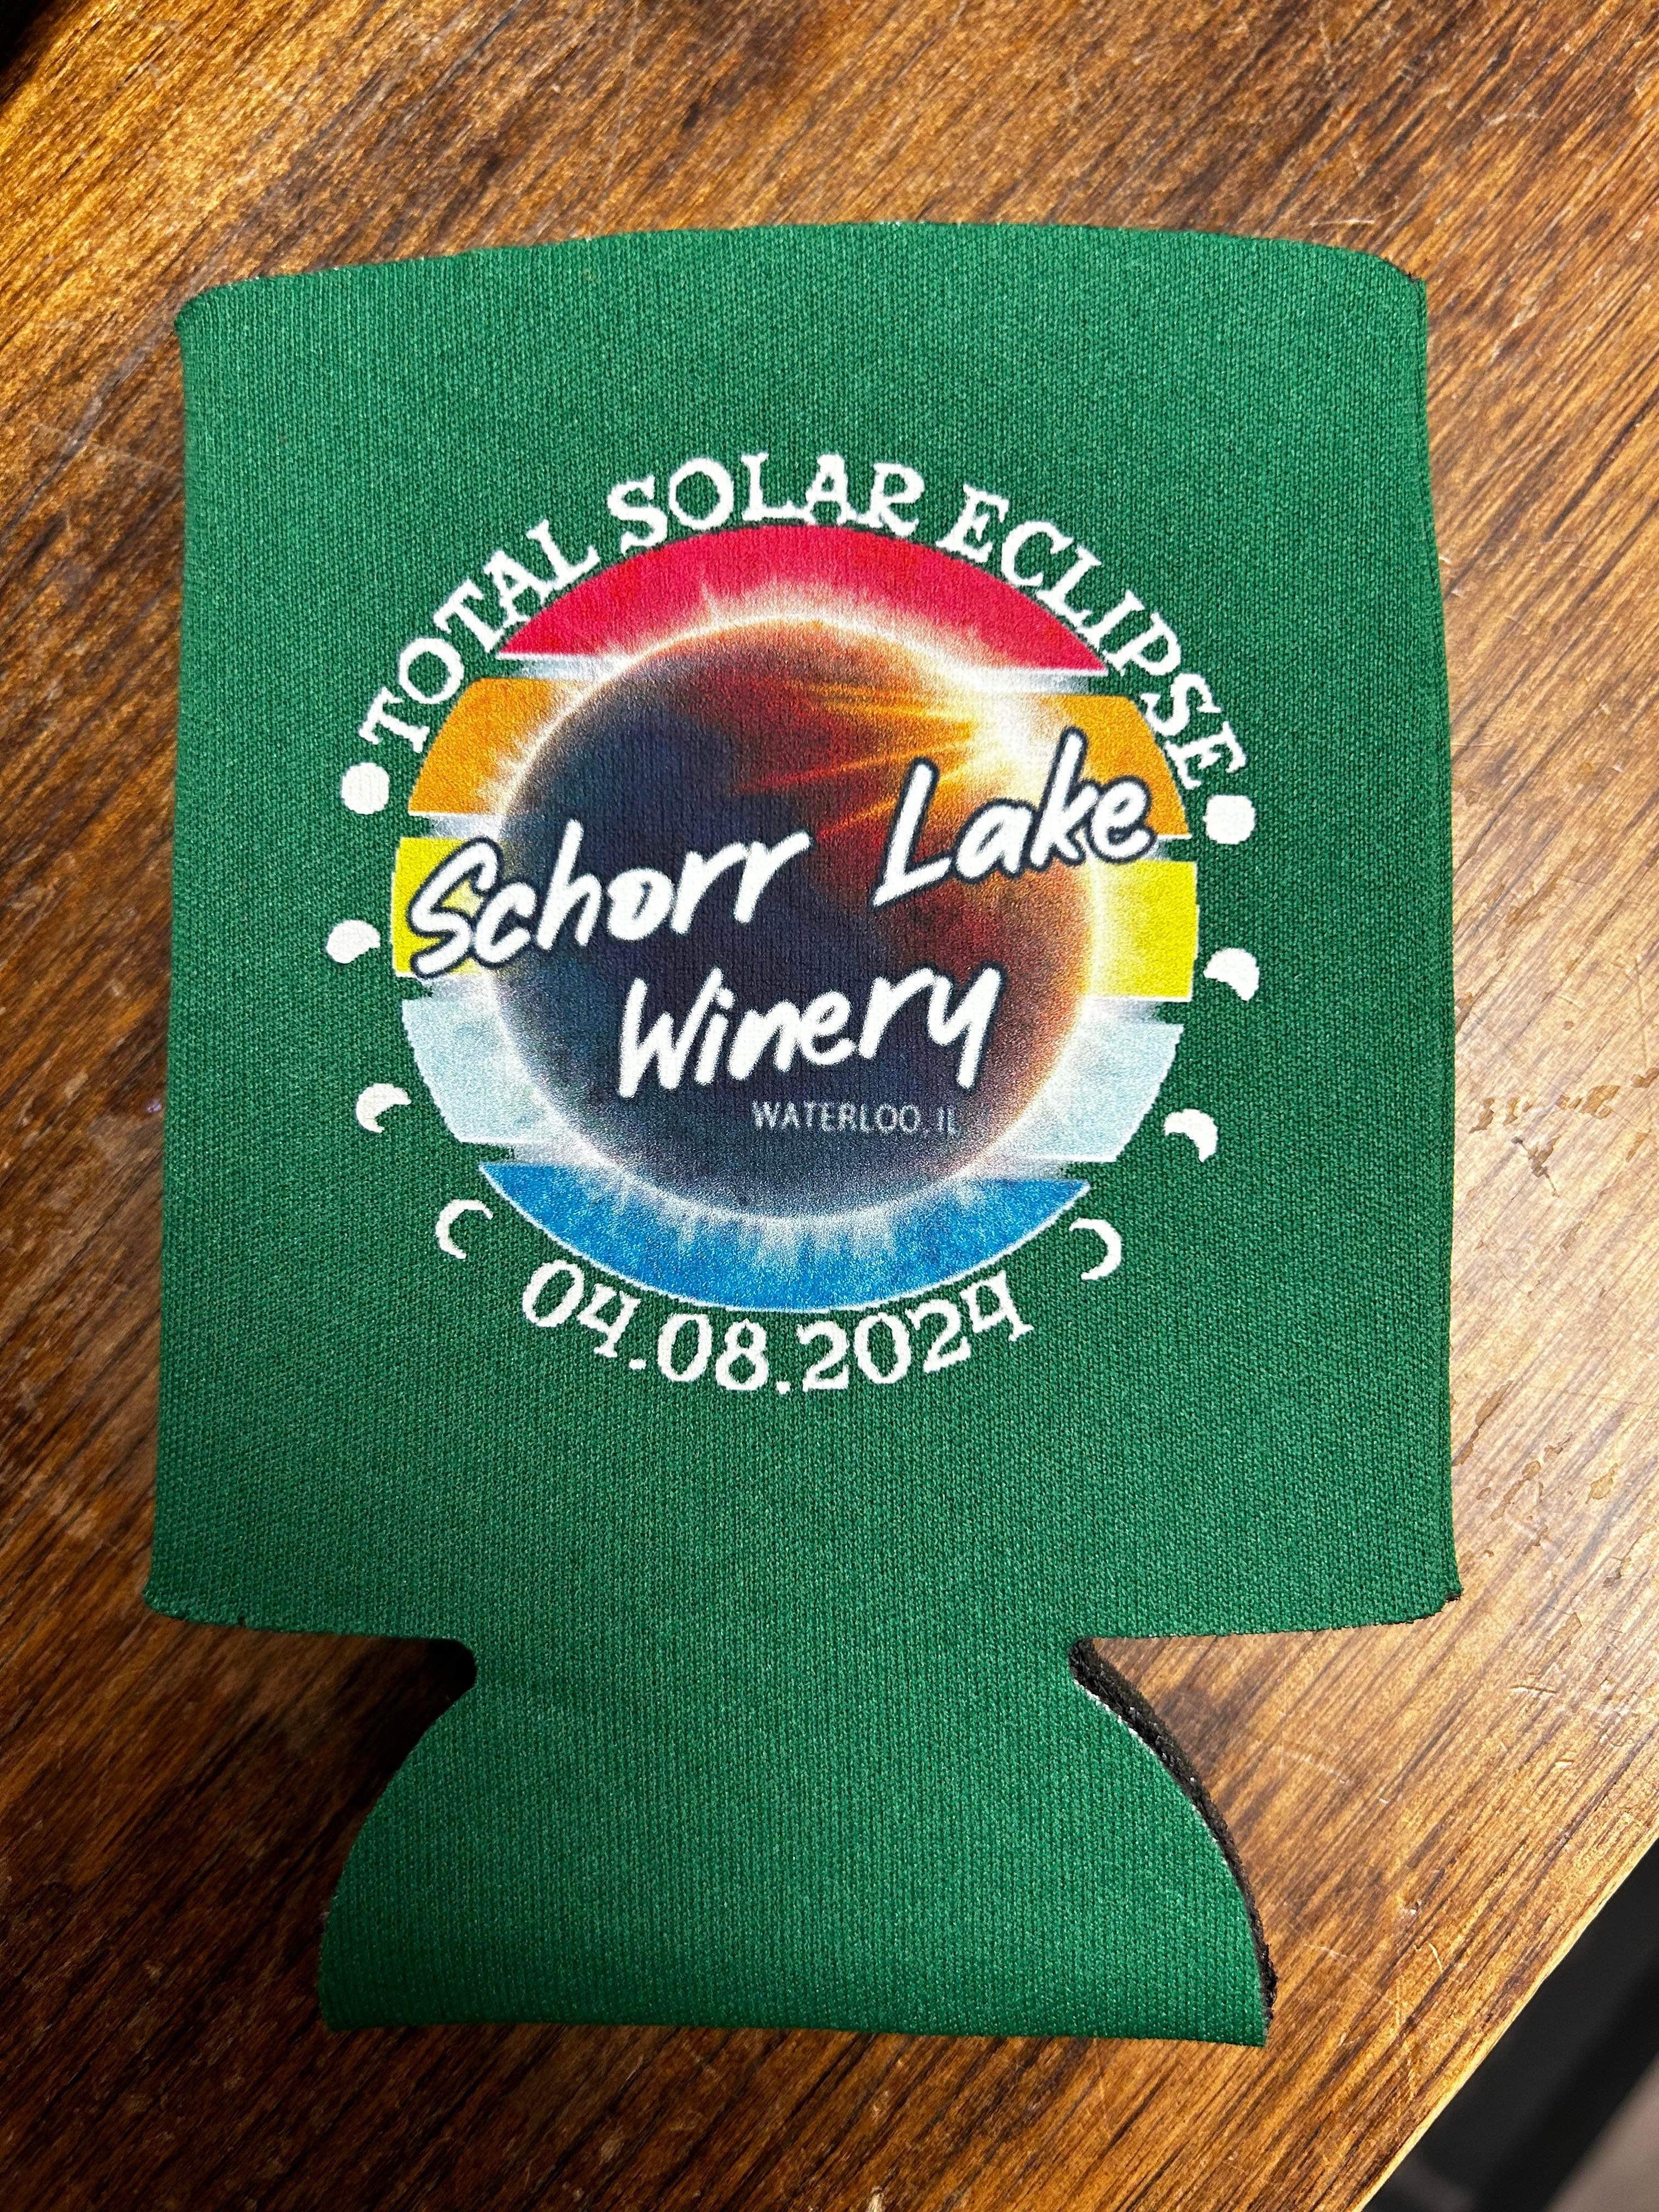 Total Solar Eclipse Koozie - Schorr Lake Winery - Waterloo, IL